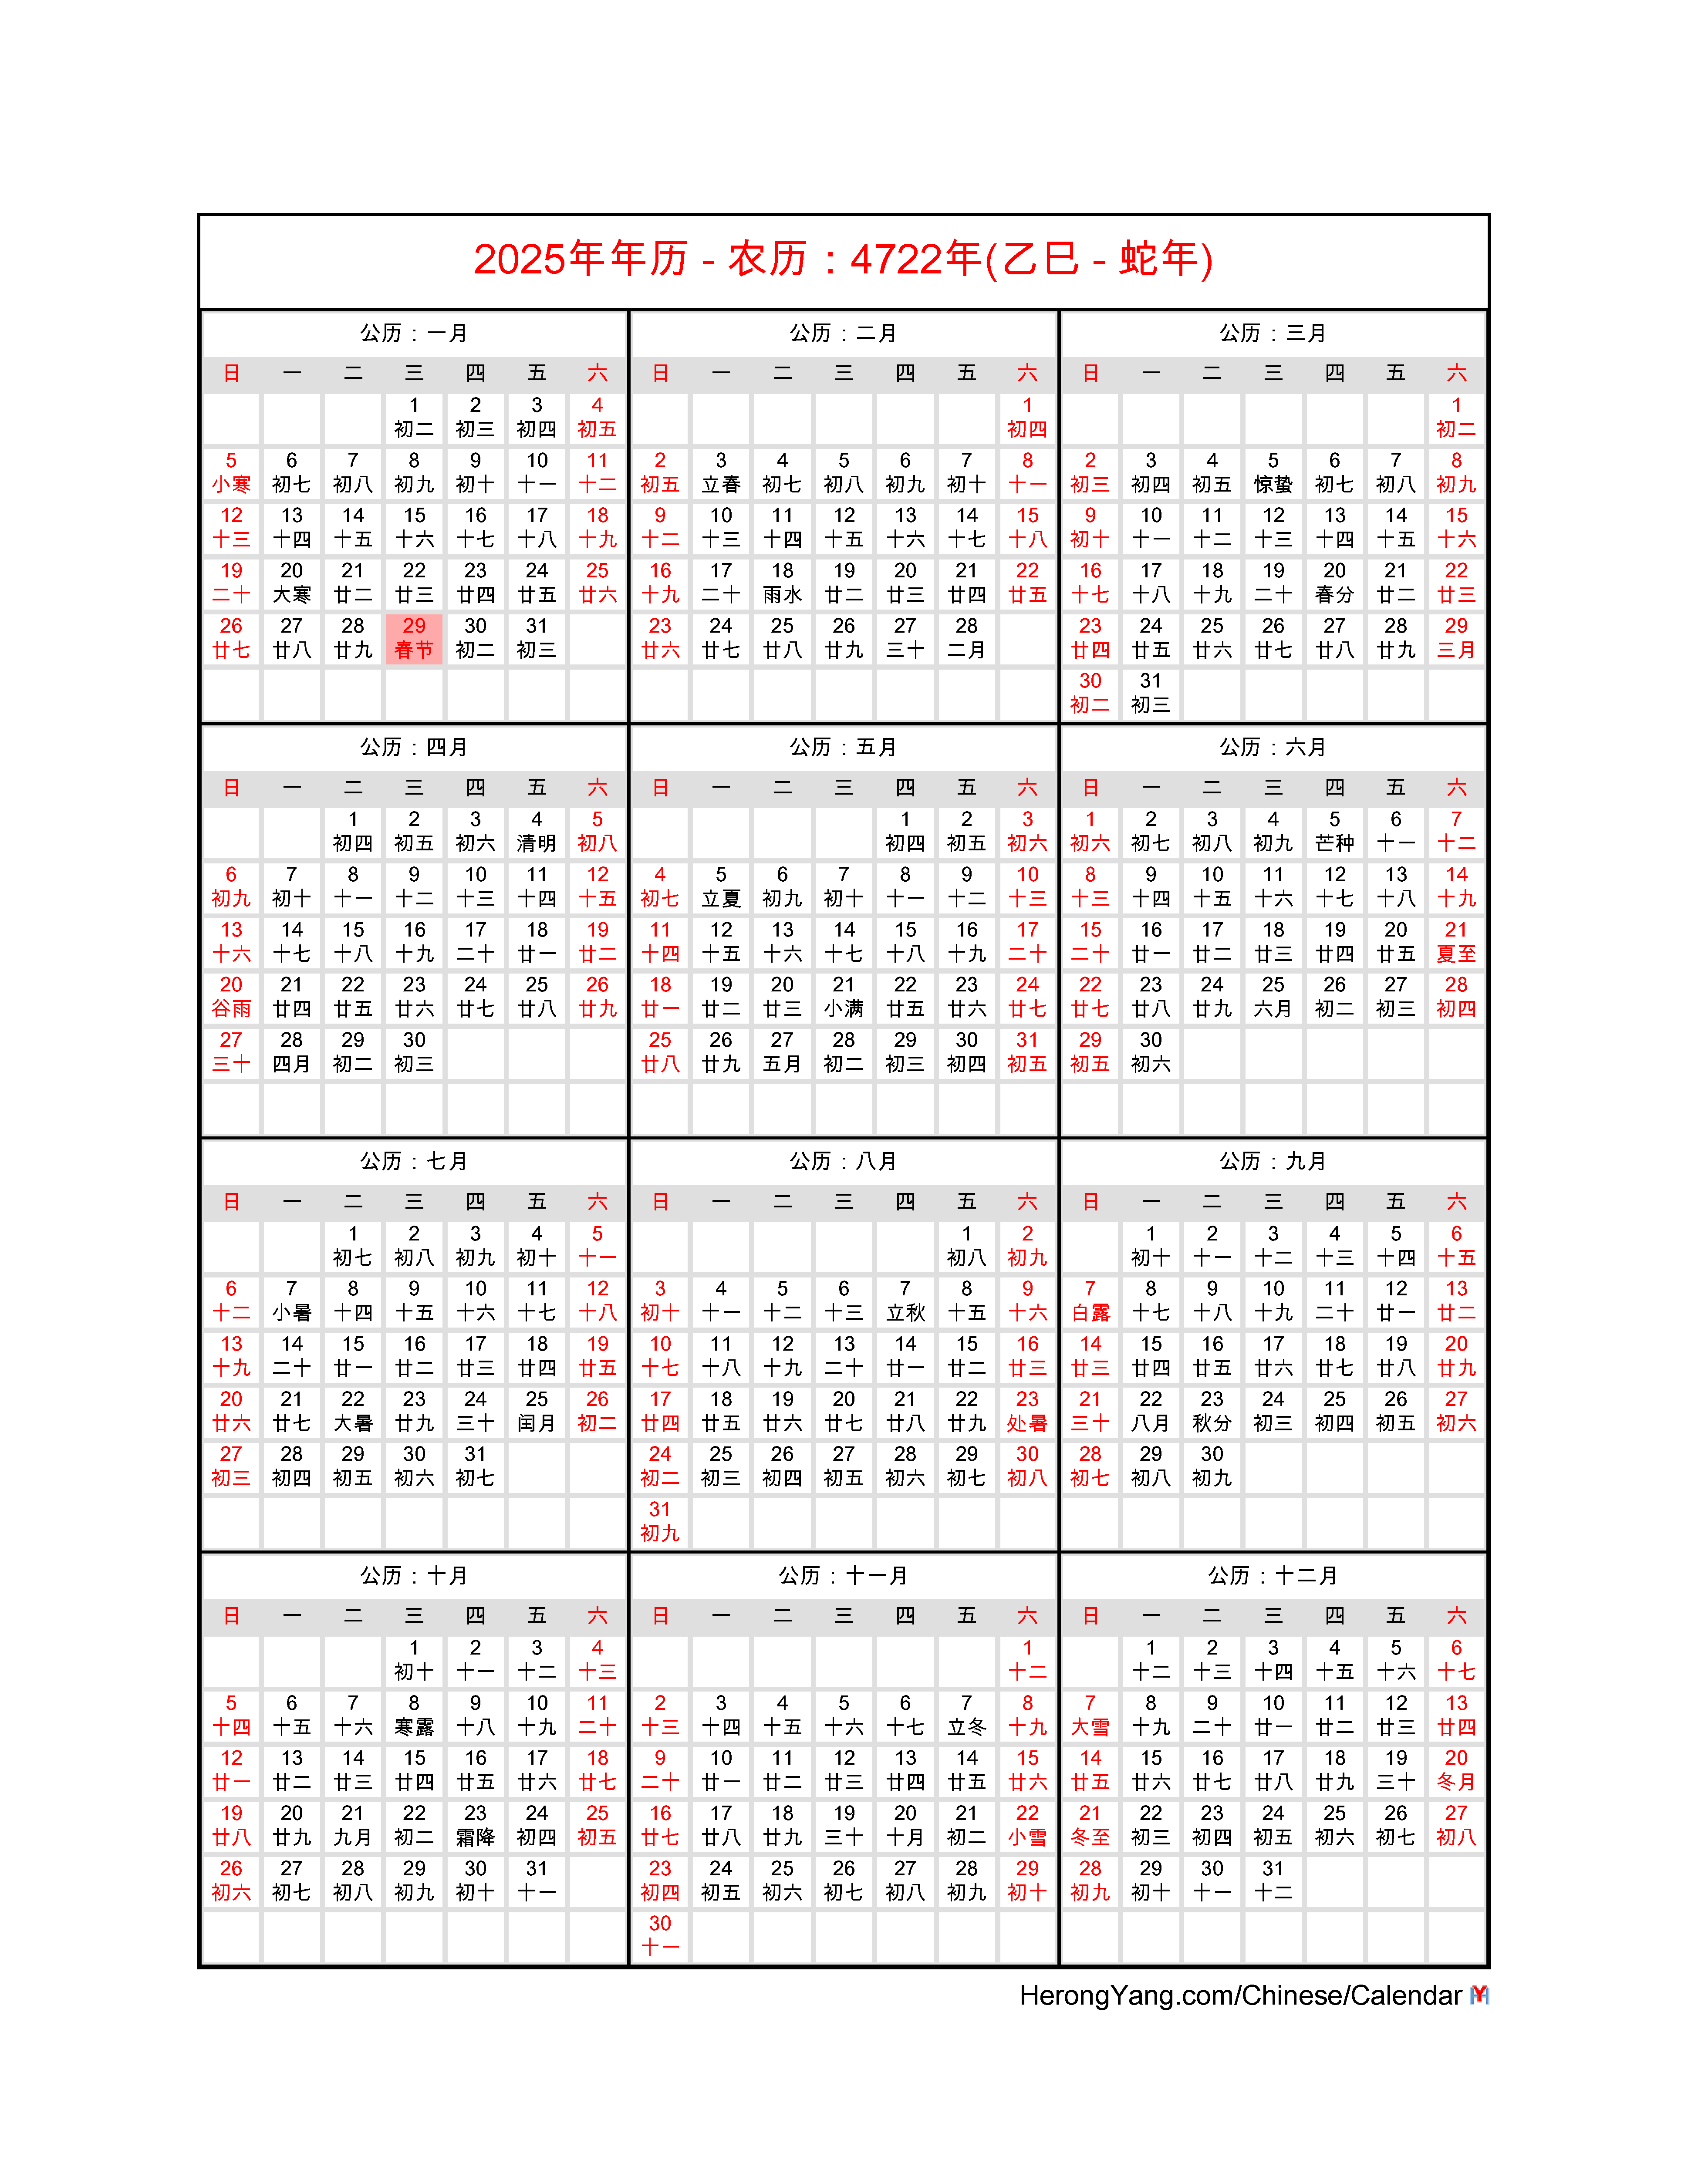 Lunar New Year 2025 Calendar